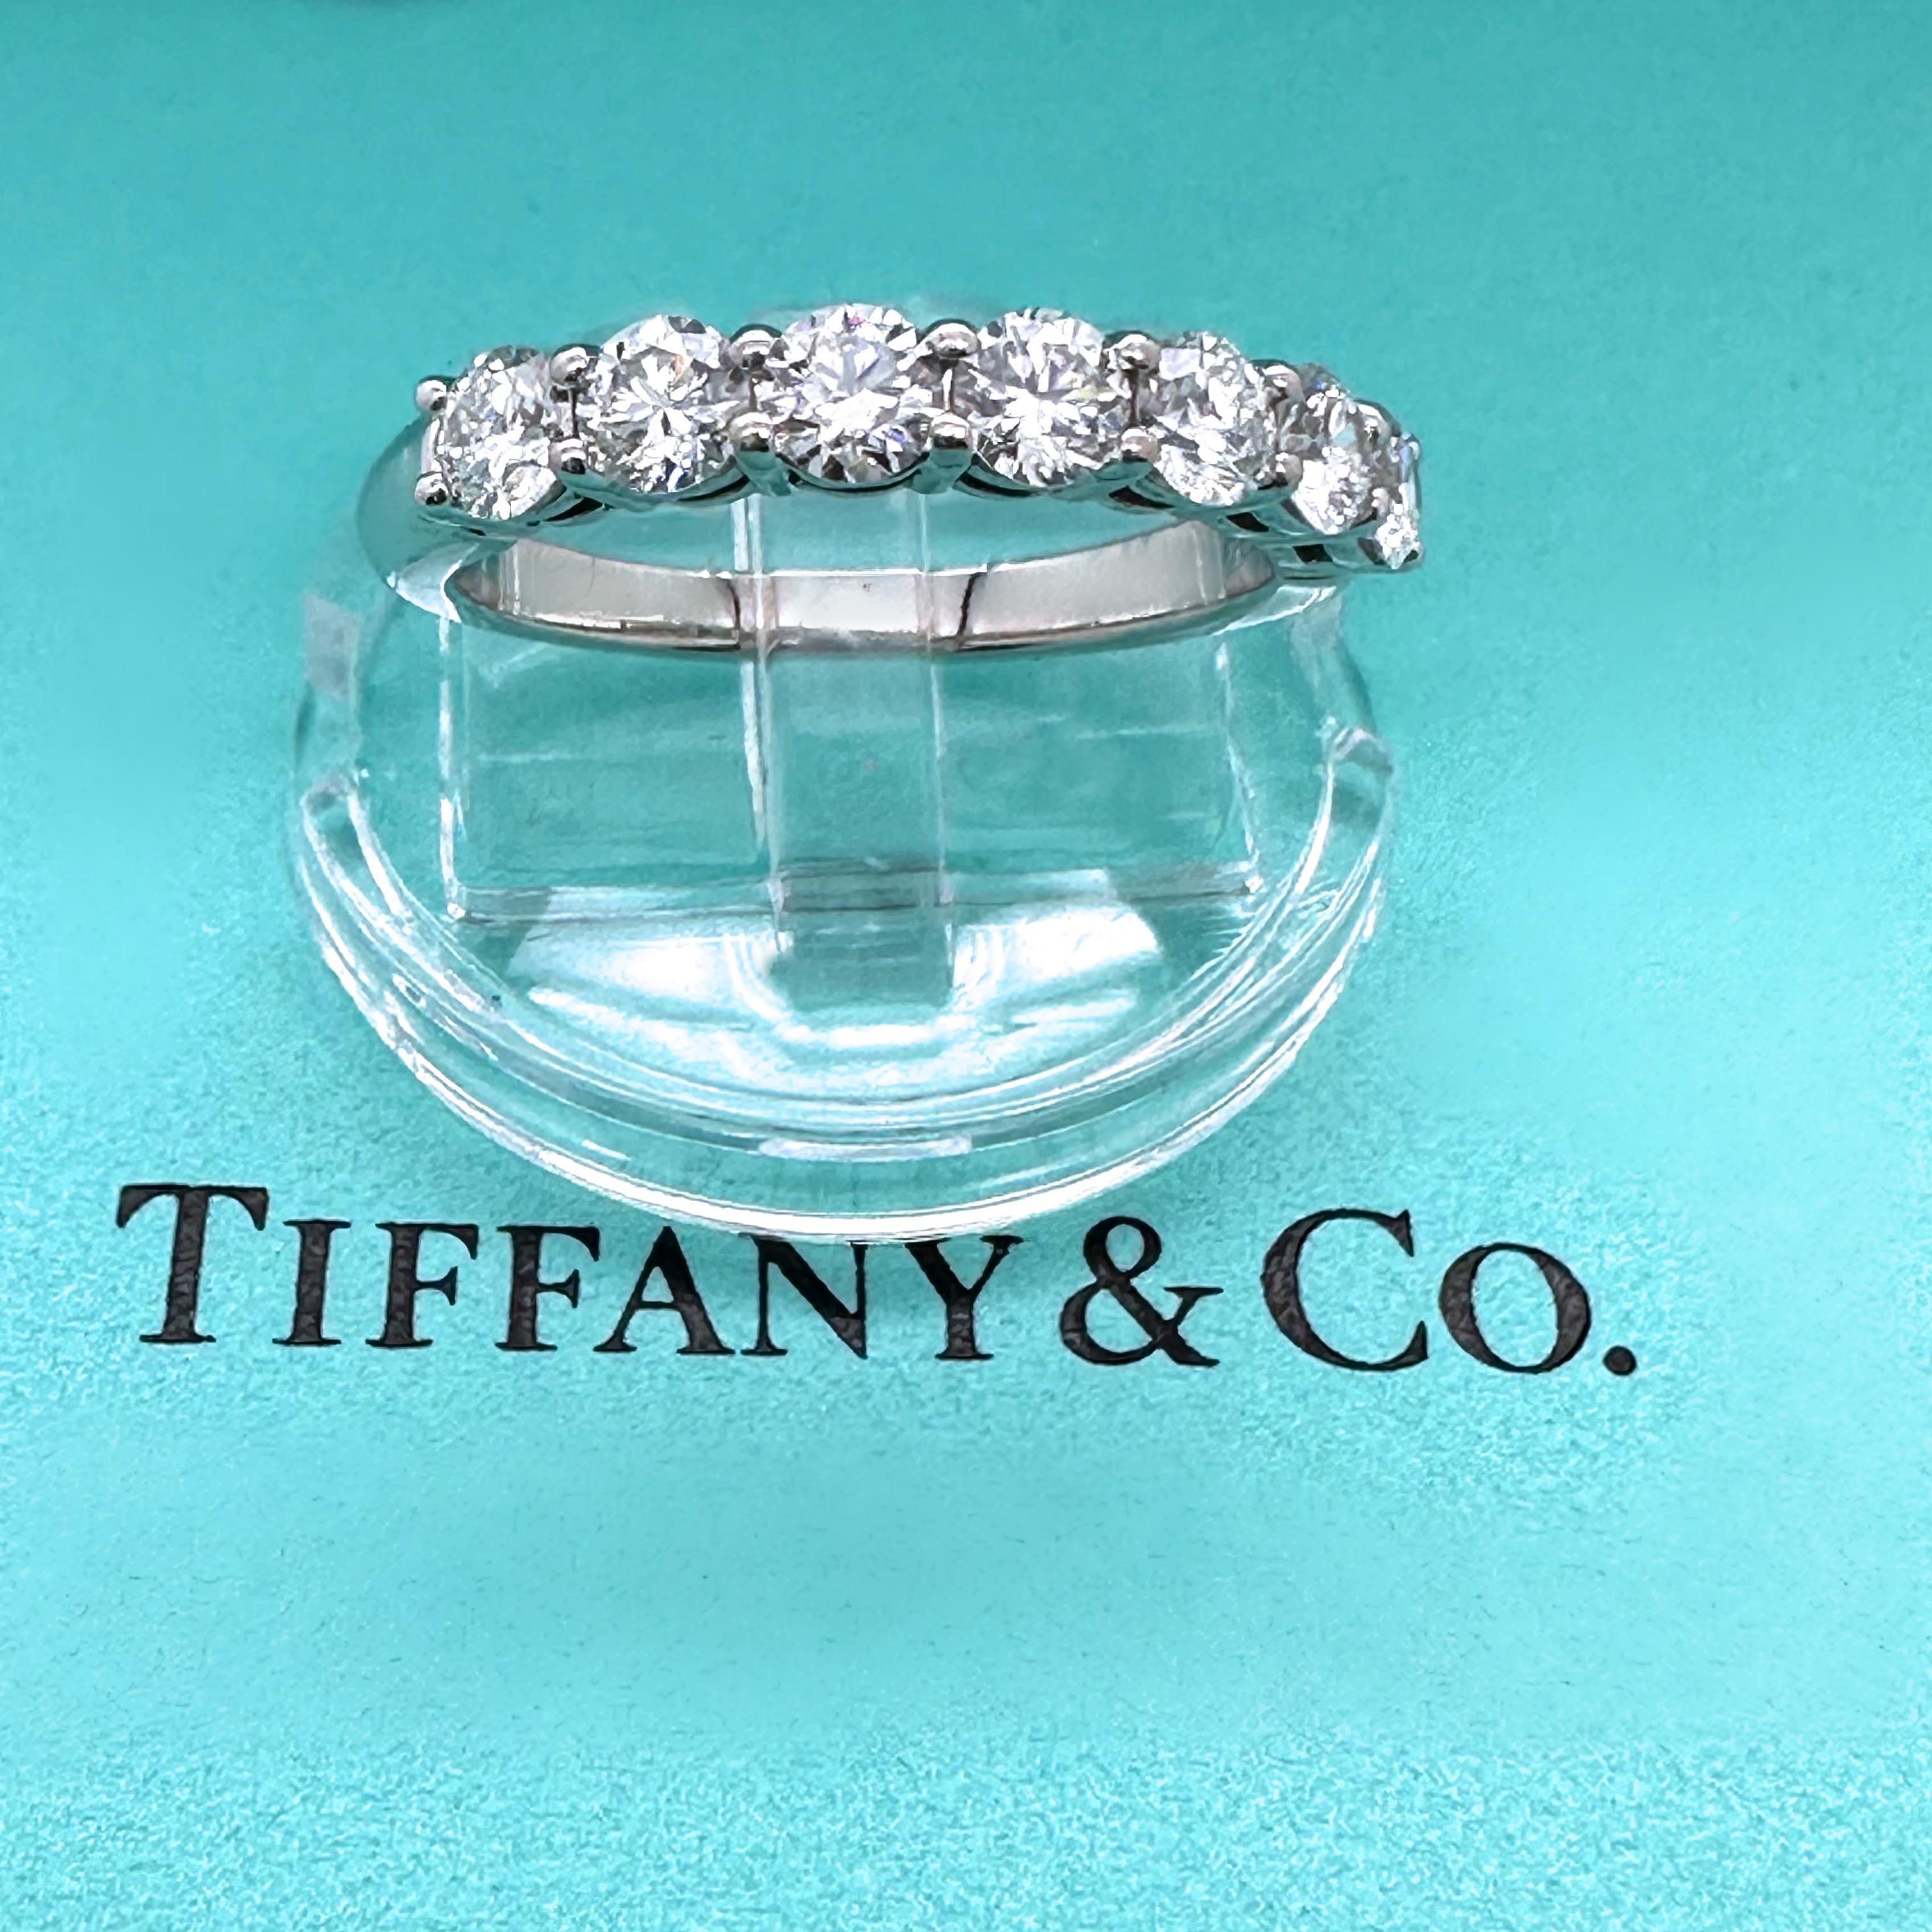 Tiffany & Co. Forever Half Circle Diamond Band
Style: Band
Ref. number: 60004163
Metal: Platinum PT950
Size / Measurements: 6.25 sizable
TCW: ~ 0.91 TCW
Main Diamond: 7 Round Brilliant Diamonds
Hallmark: TIFFANY&CO. PT950
Includes: T&C Jewelry